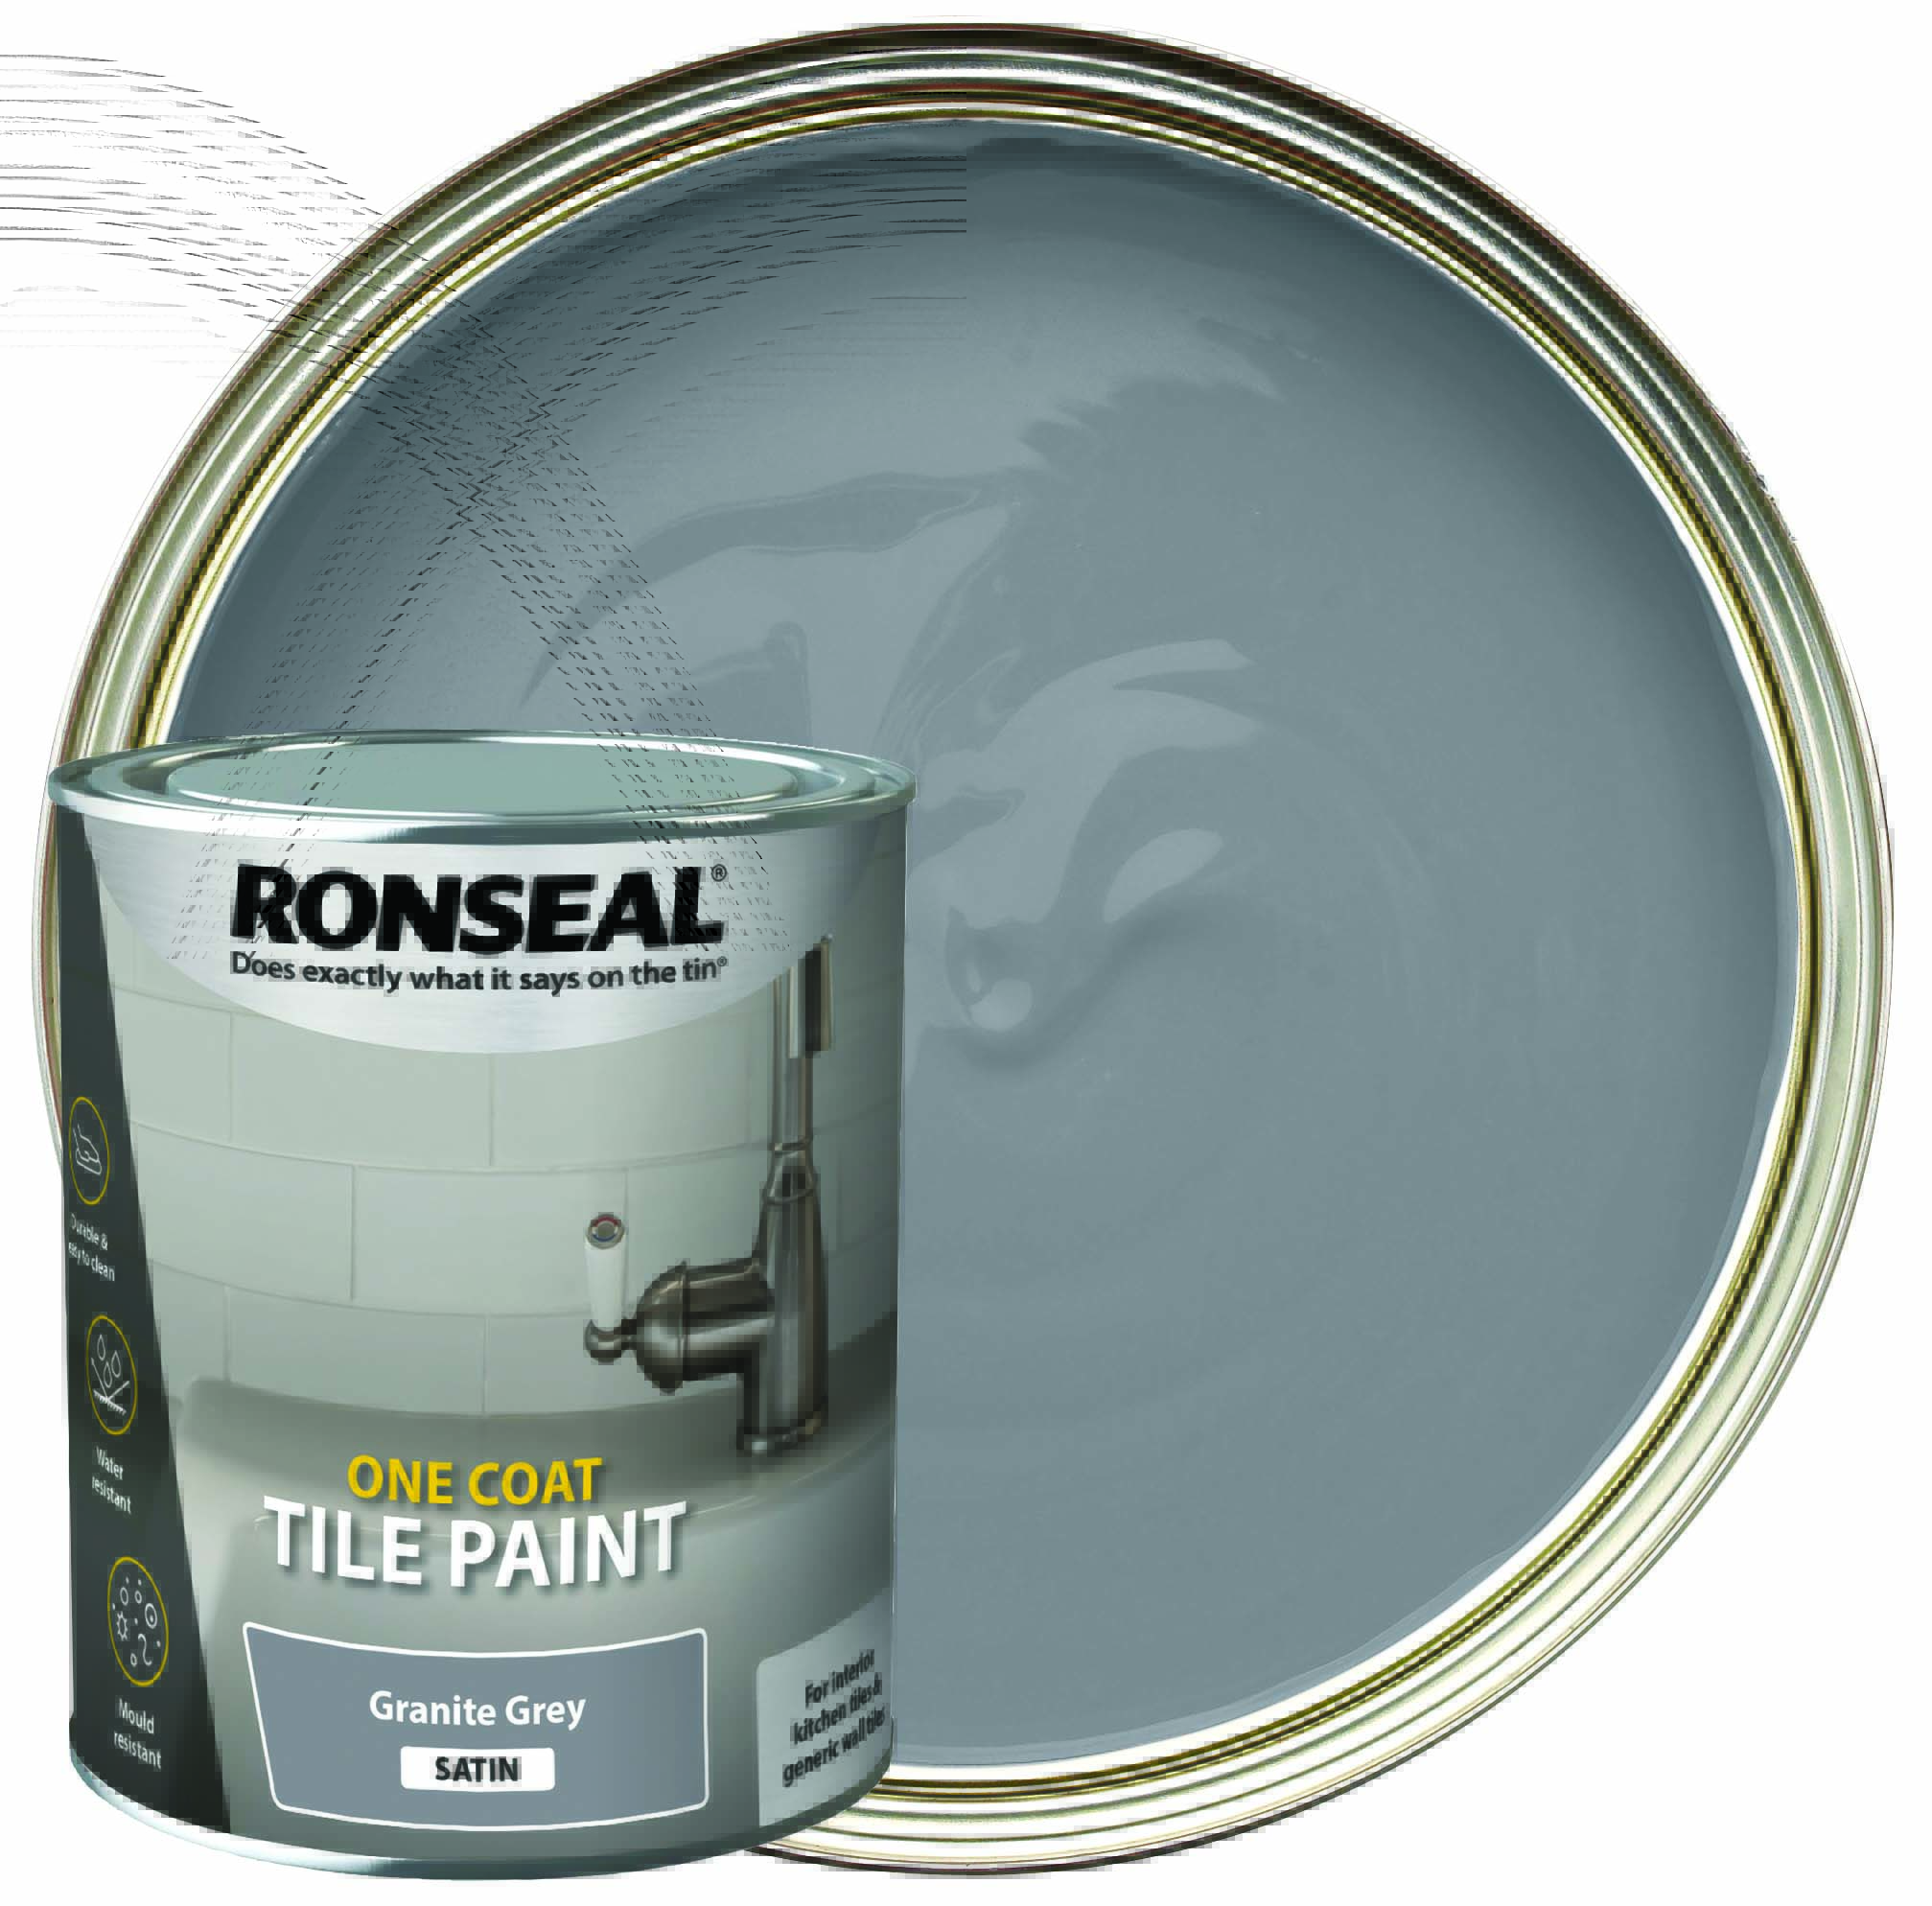 Image of Ronseal One Coat Tile Paint - Satin Granite Grey 750ml